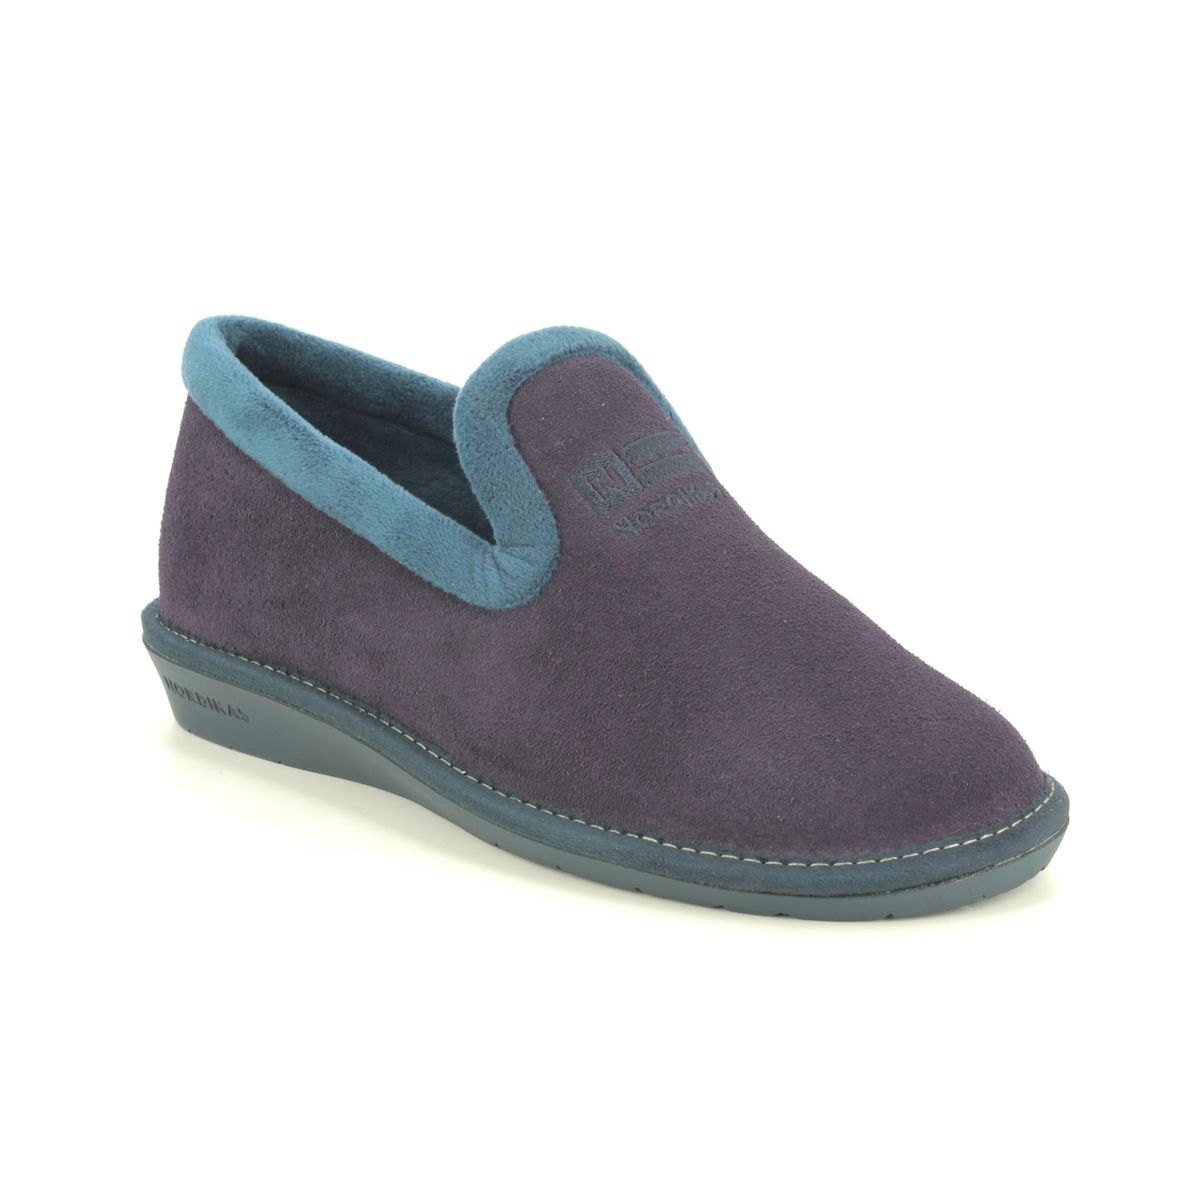 Nordikas Tabackin Purple suede Womens slippers 305-4 in a Plain  in Size 42